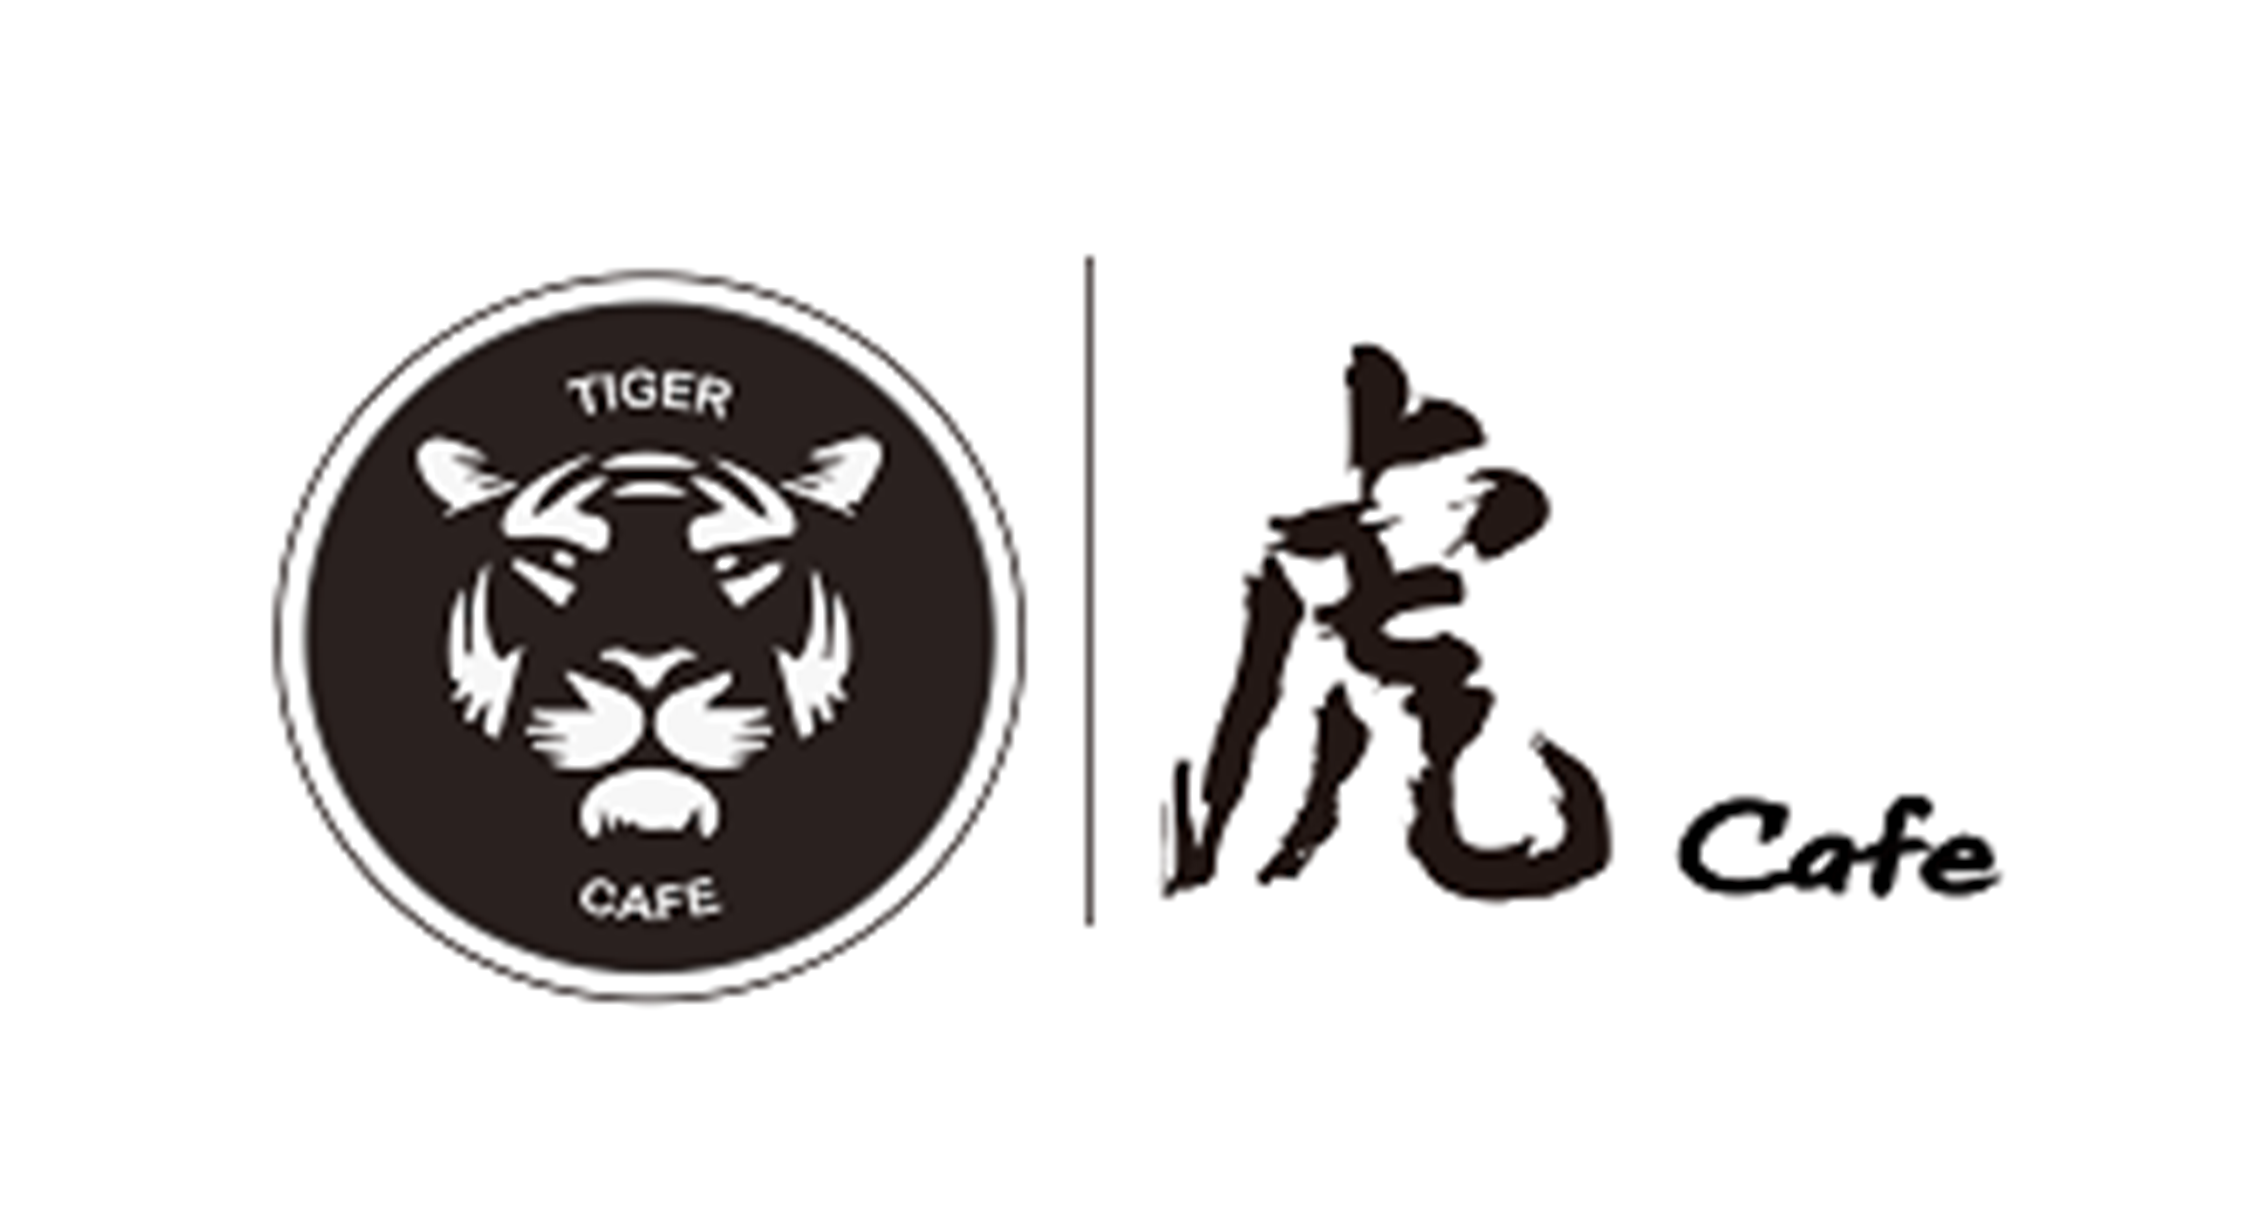 虎咖啡 Tiger Cafe